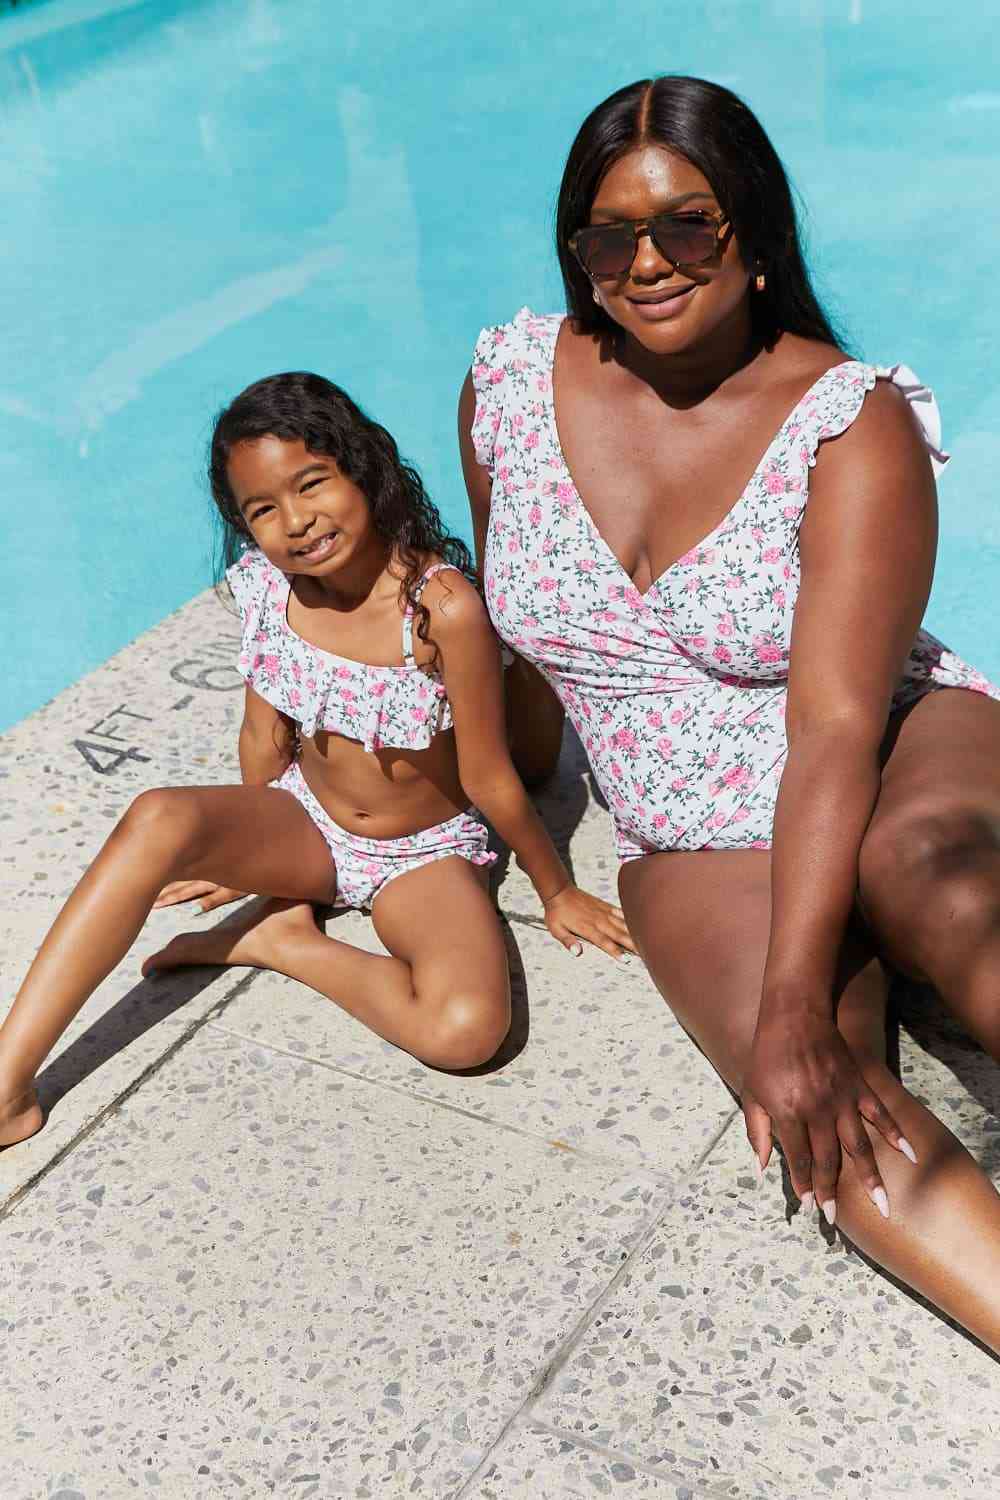 Family Swimwear Set Mother Baby Daughter Bikini Bathing Suit